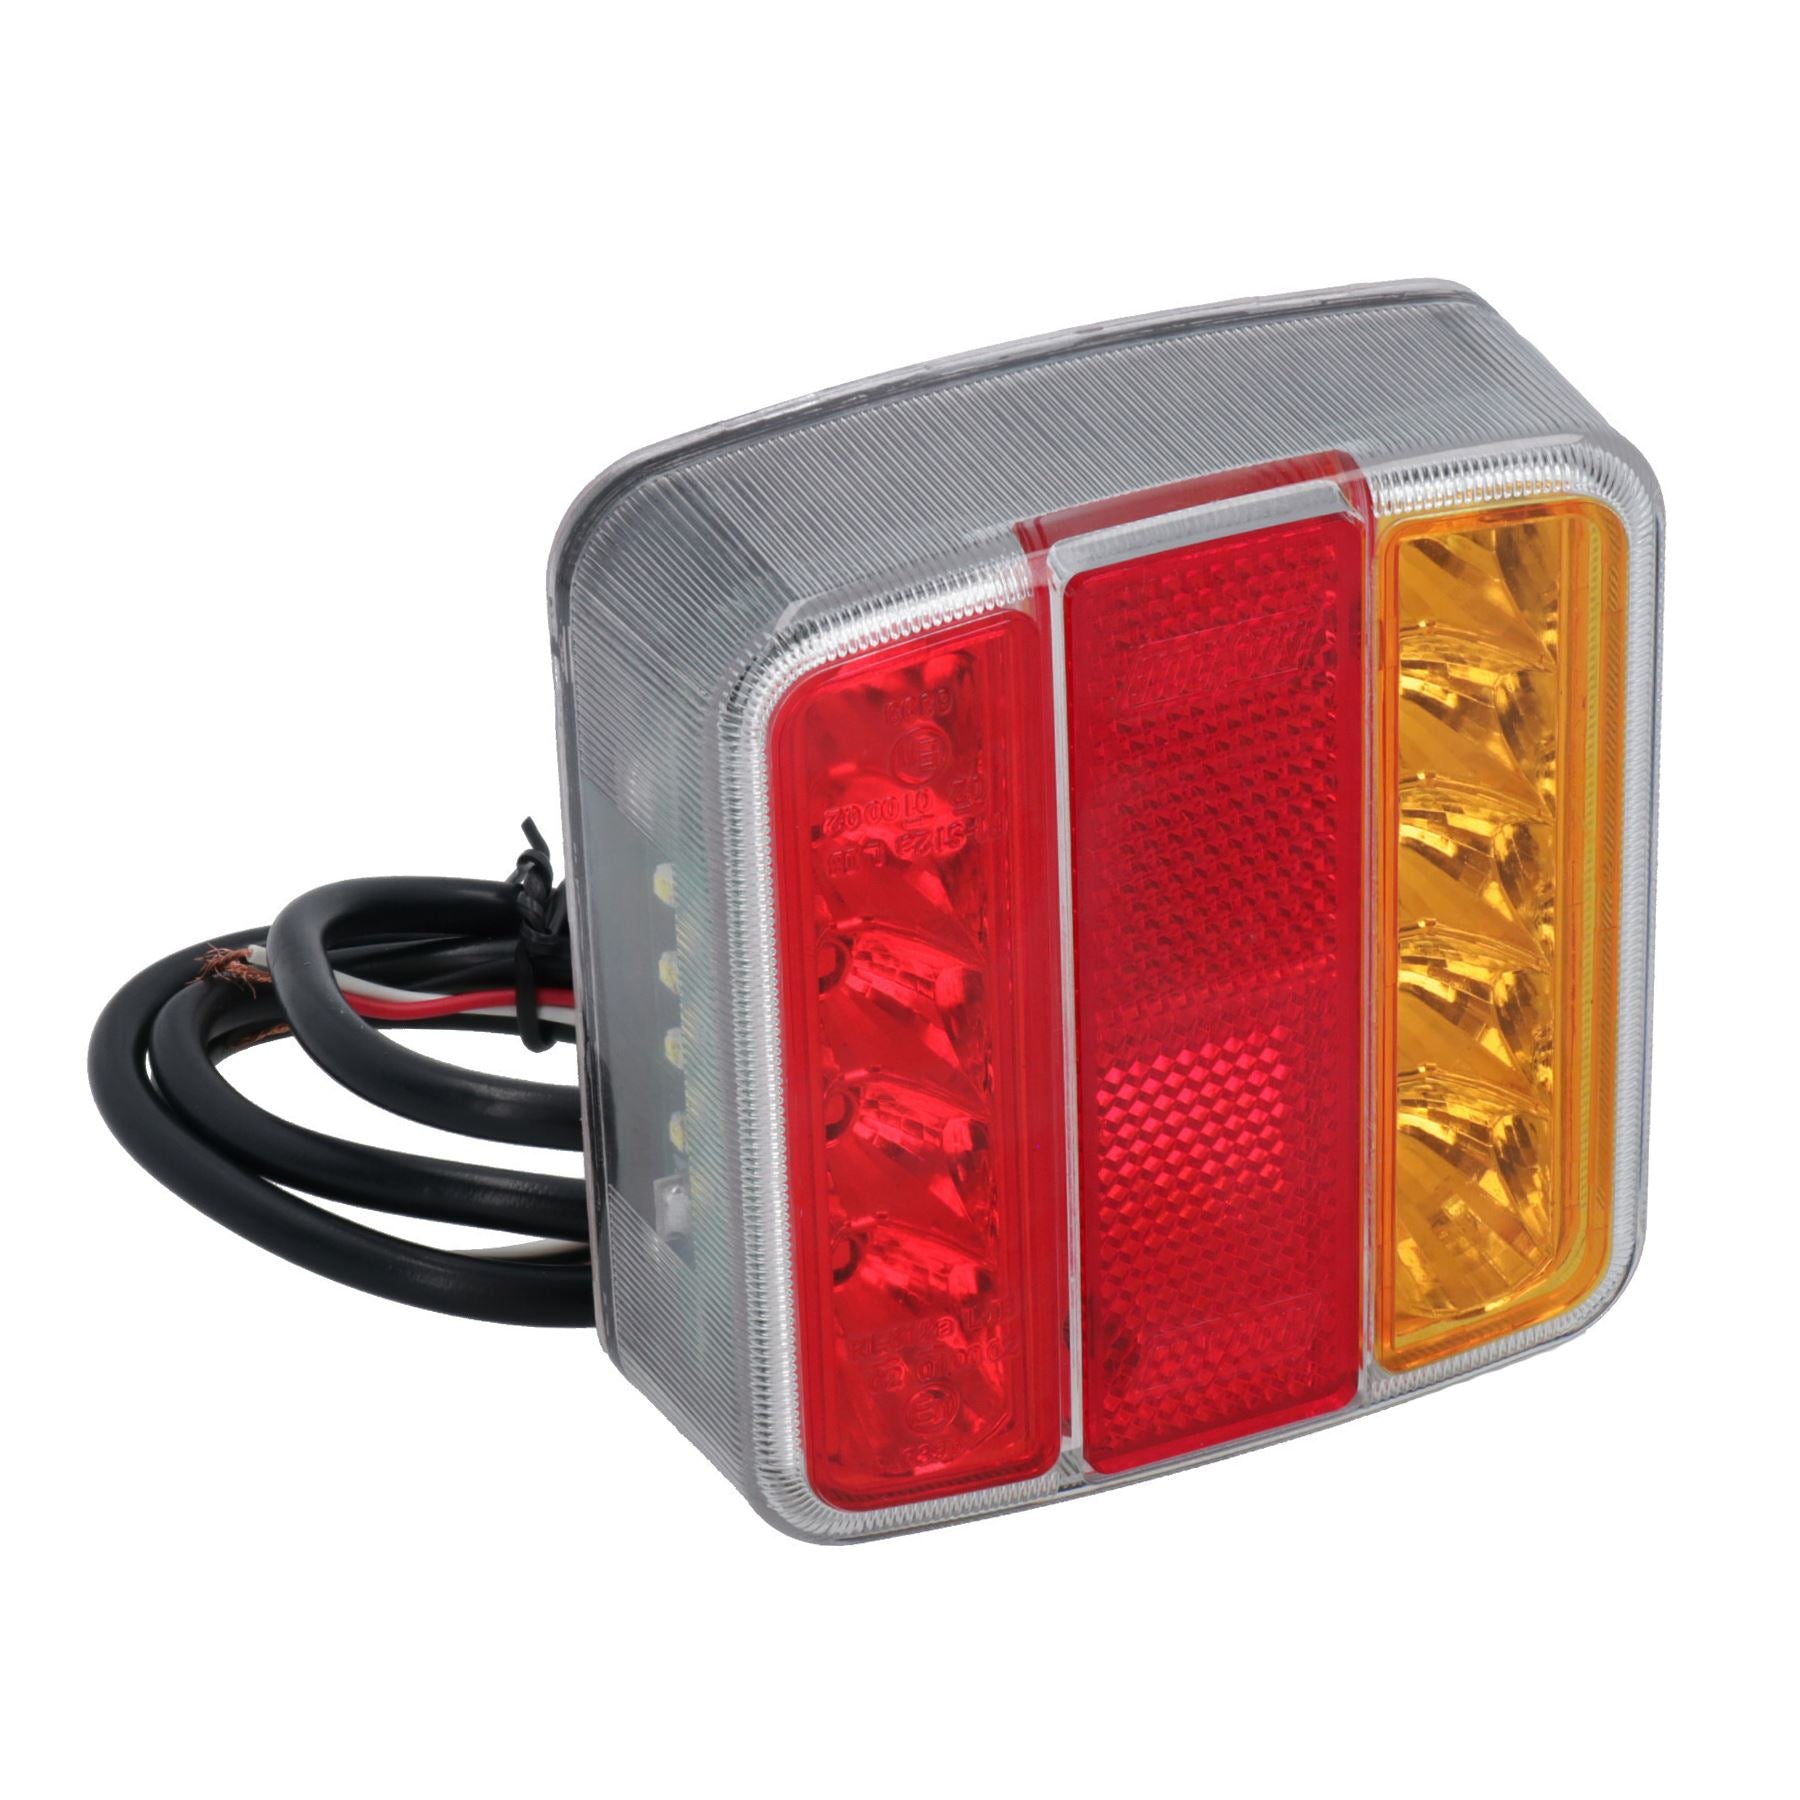 LED Square Trailer Light Replacement Lighting Board Caravan Rear Lamp 12v